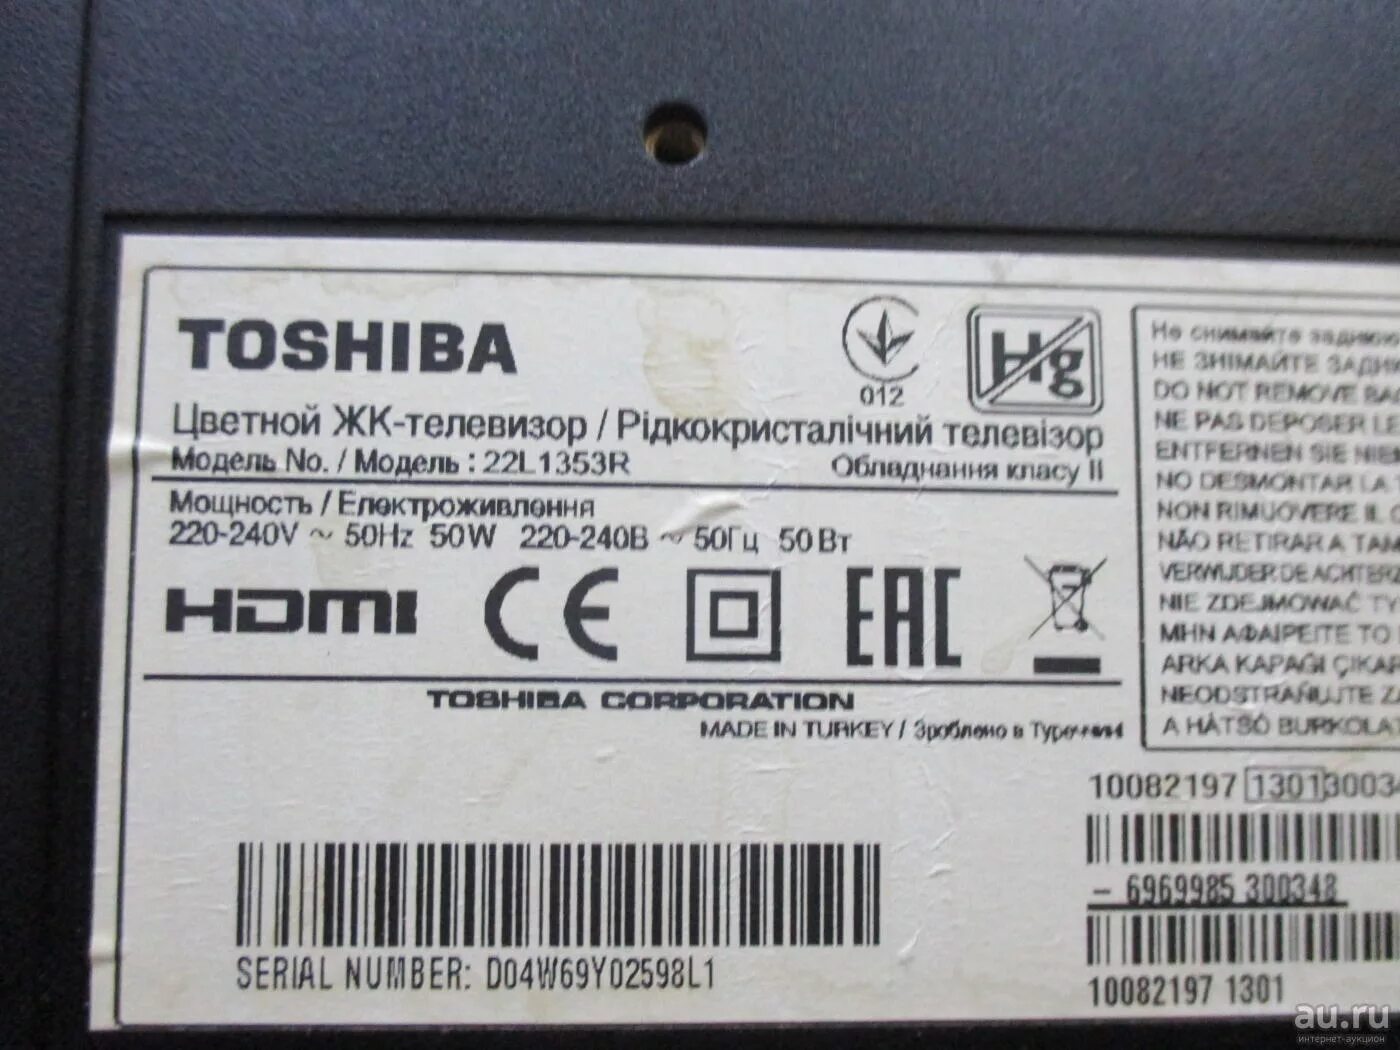 Toshiba 22l1353. Toshiba 22l1353 led. Телевизор Toshiba модель no/ 22l1353l. Toshiba 22dv733r. Телевизор тошиба что делать